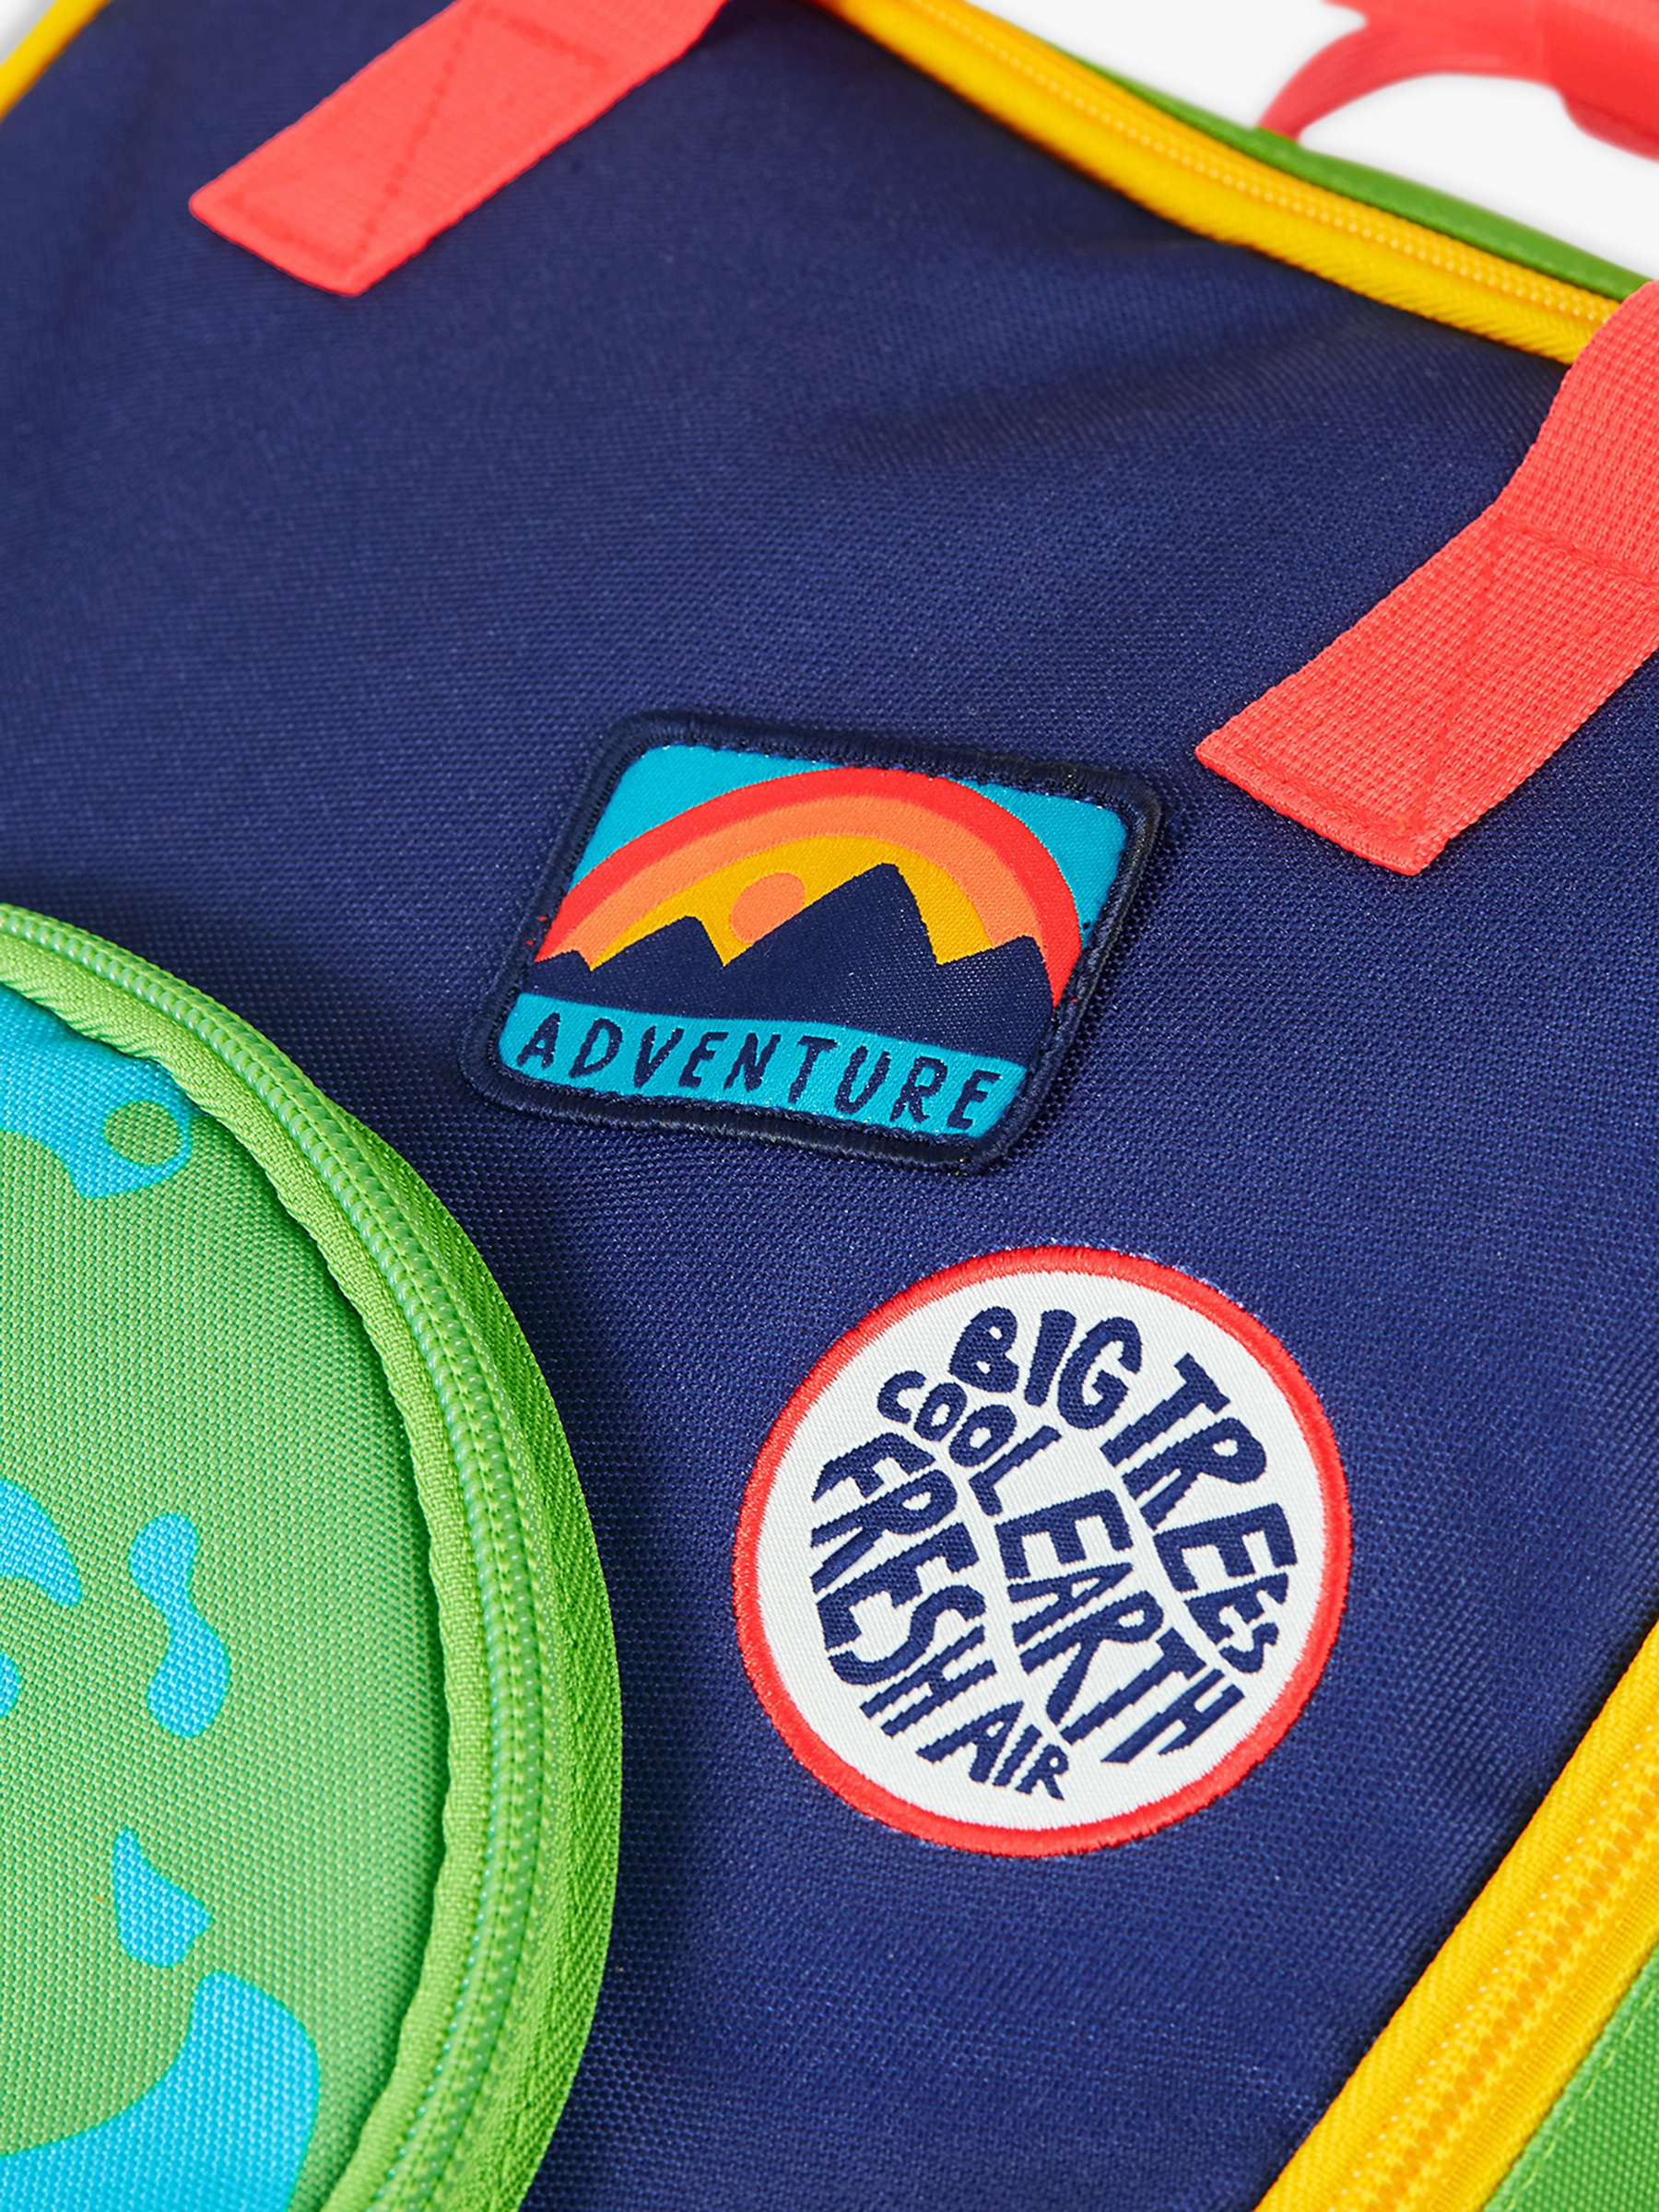 Buy Frugi Kids' Ramble Rainbow Planet Earth Backpack, Multi Online at johnlewis.com